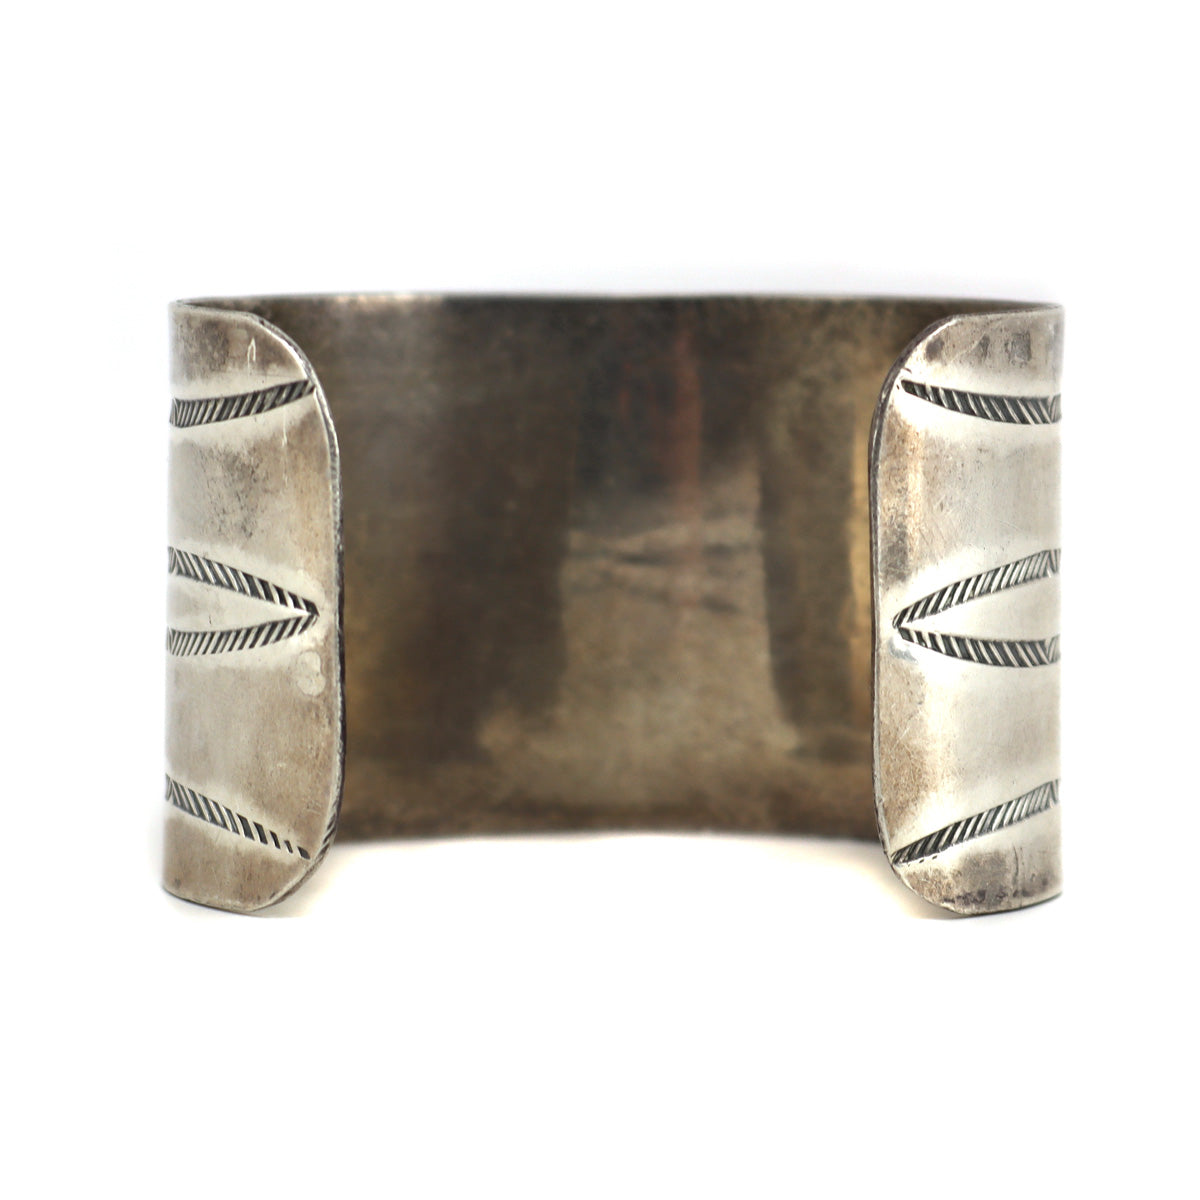 Navajo - Silver Bracelet with Stamped Design c. 1930s, size 6.75 (J16127)